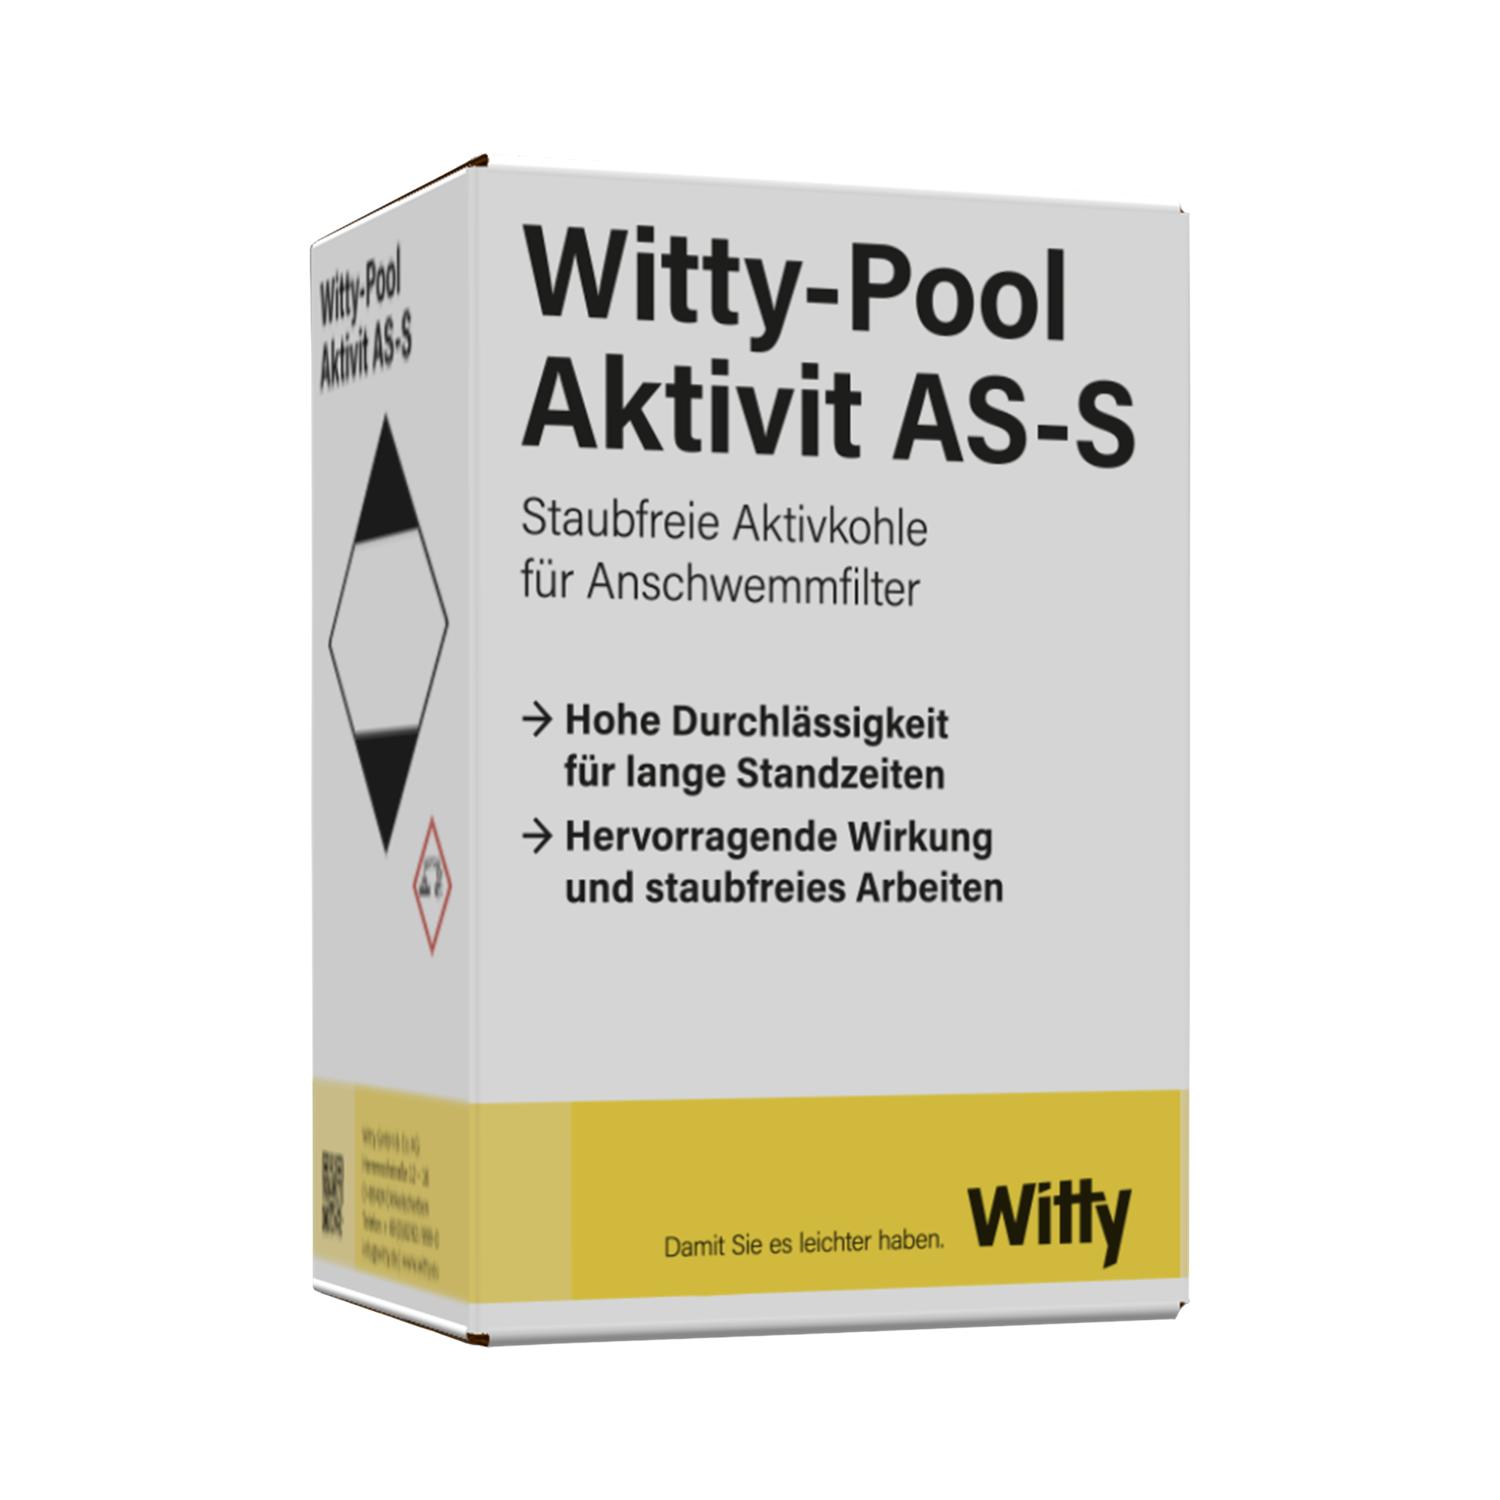 Witty-Pool Aktivit AS-S